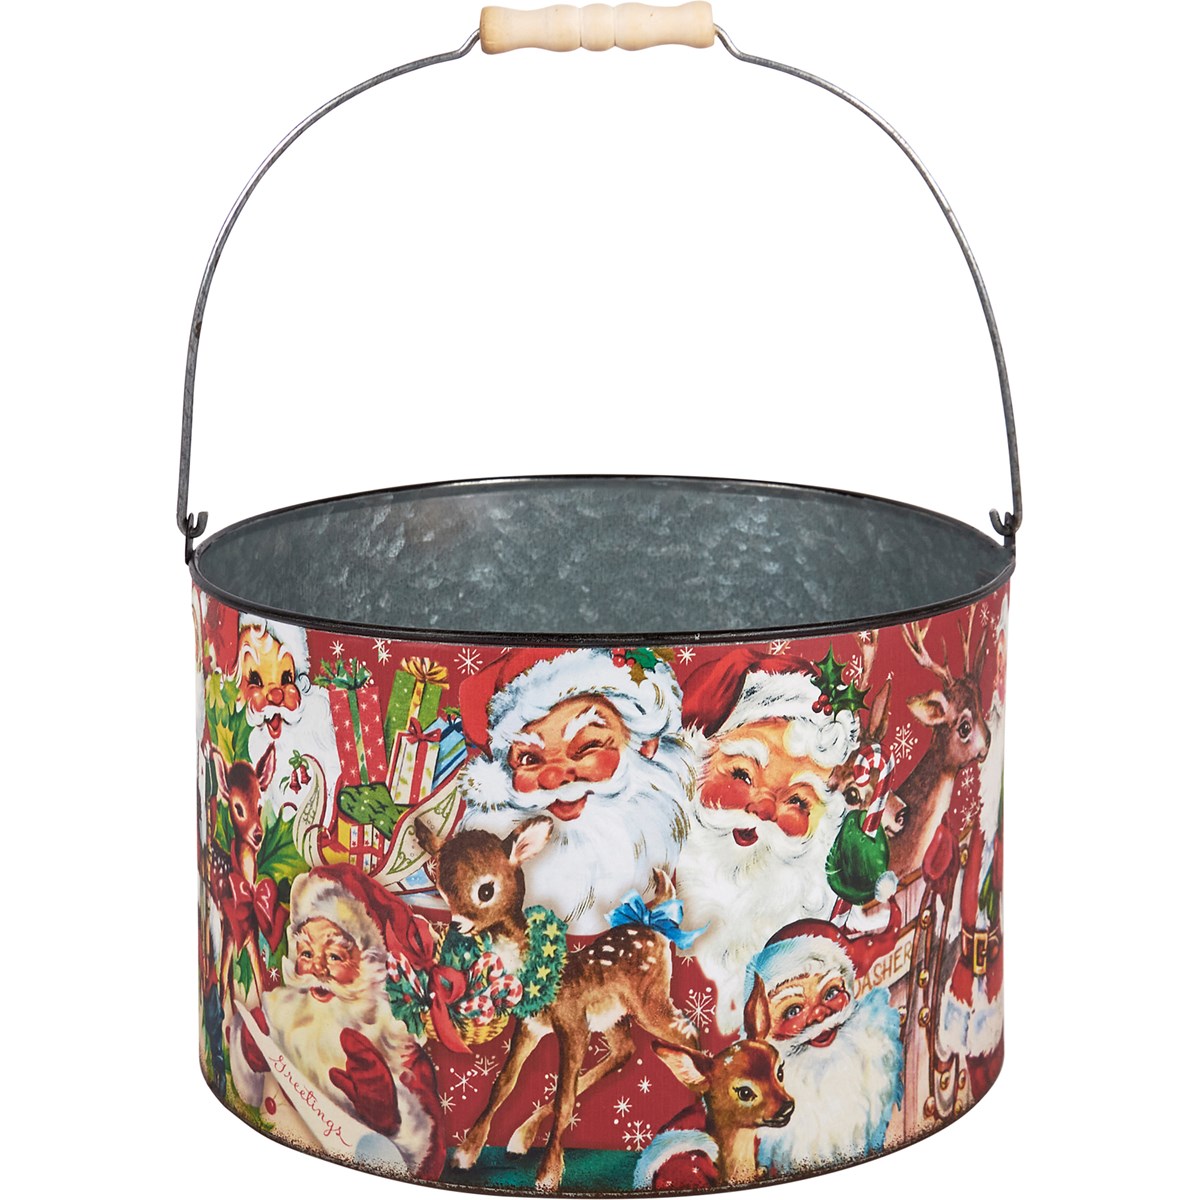 Retro Santa Bucket Set - Metal, Paper, Wood